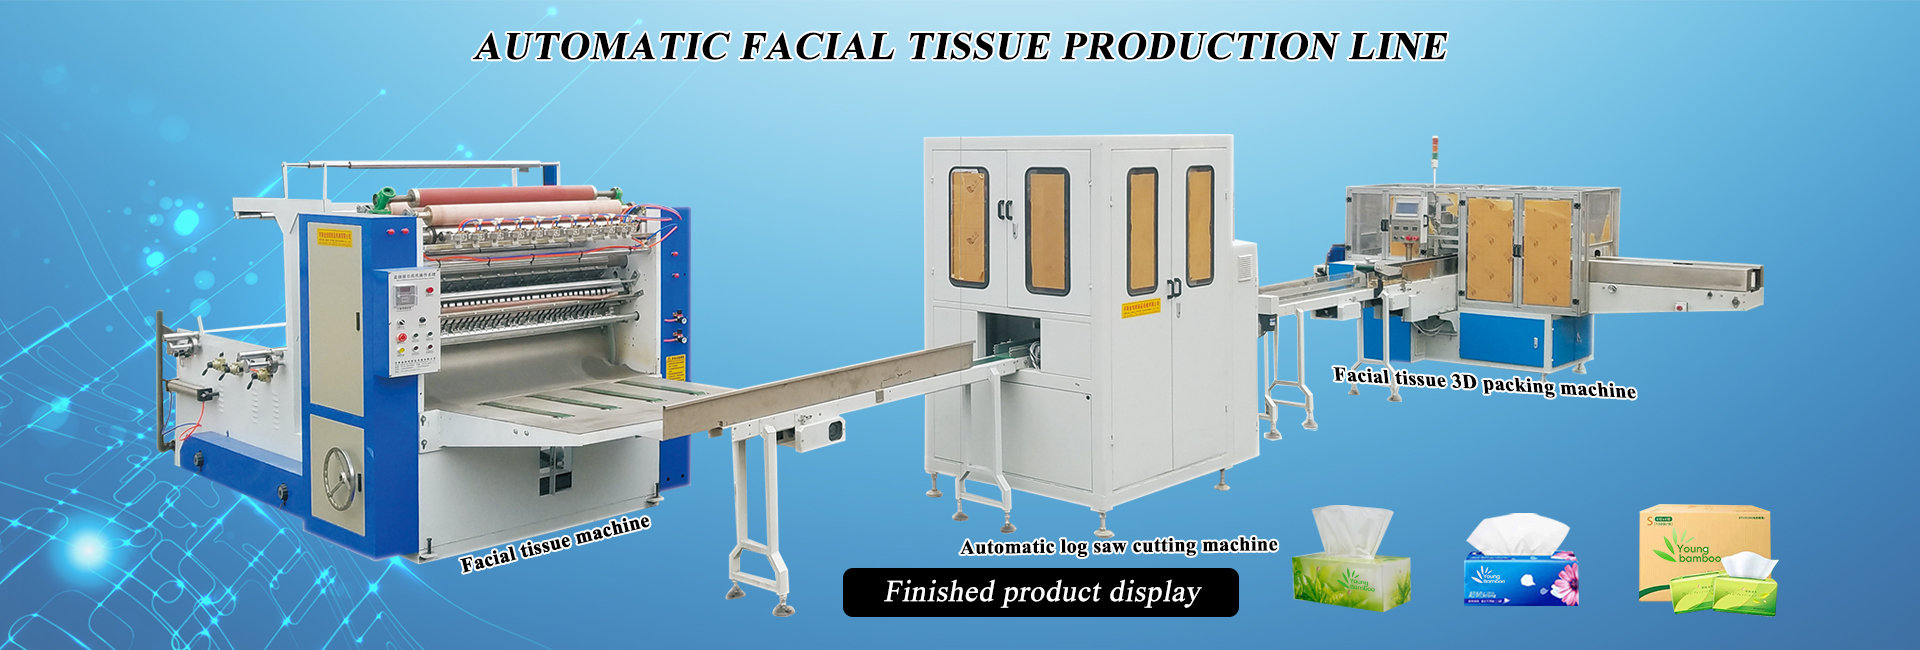 facial-tissue-line